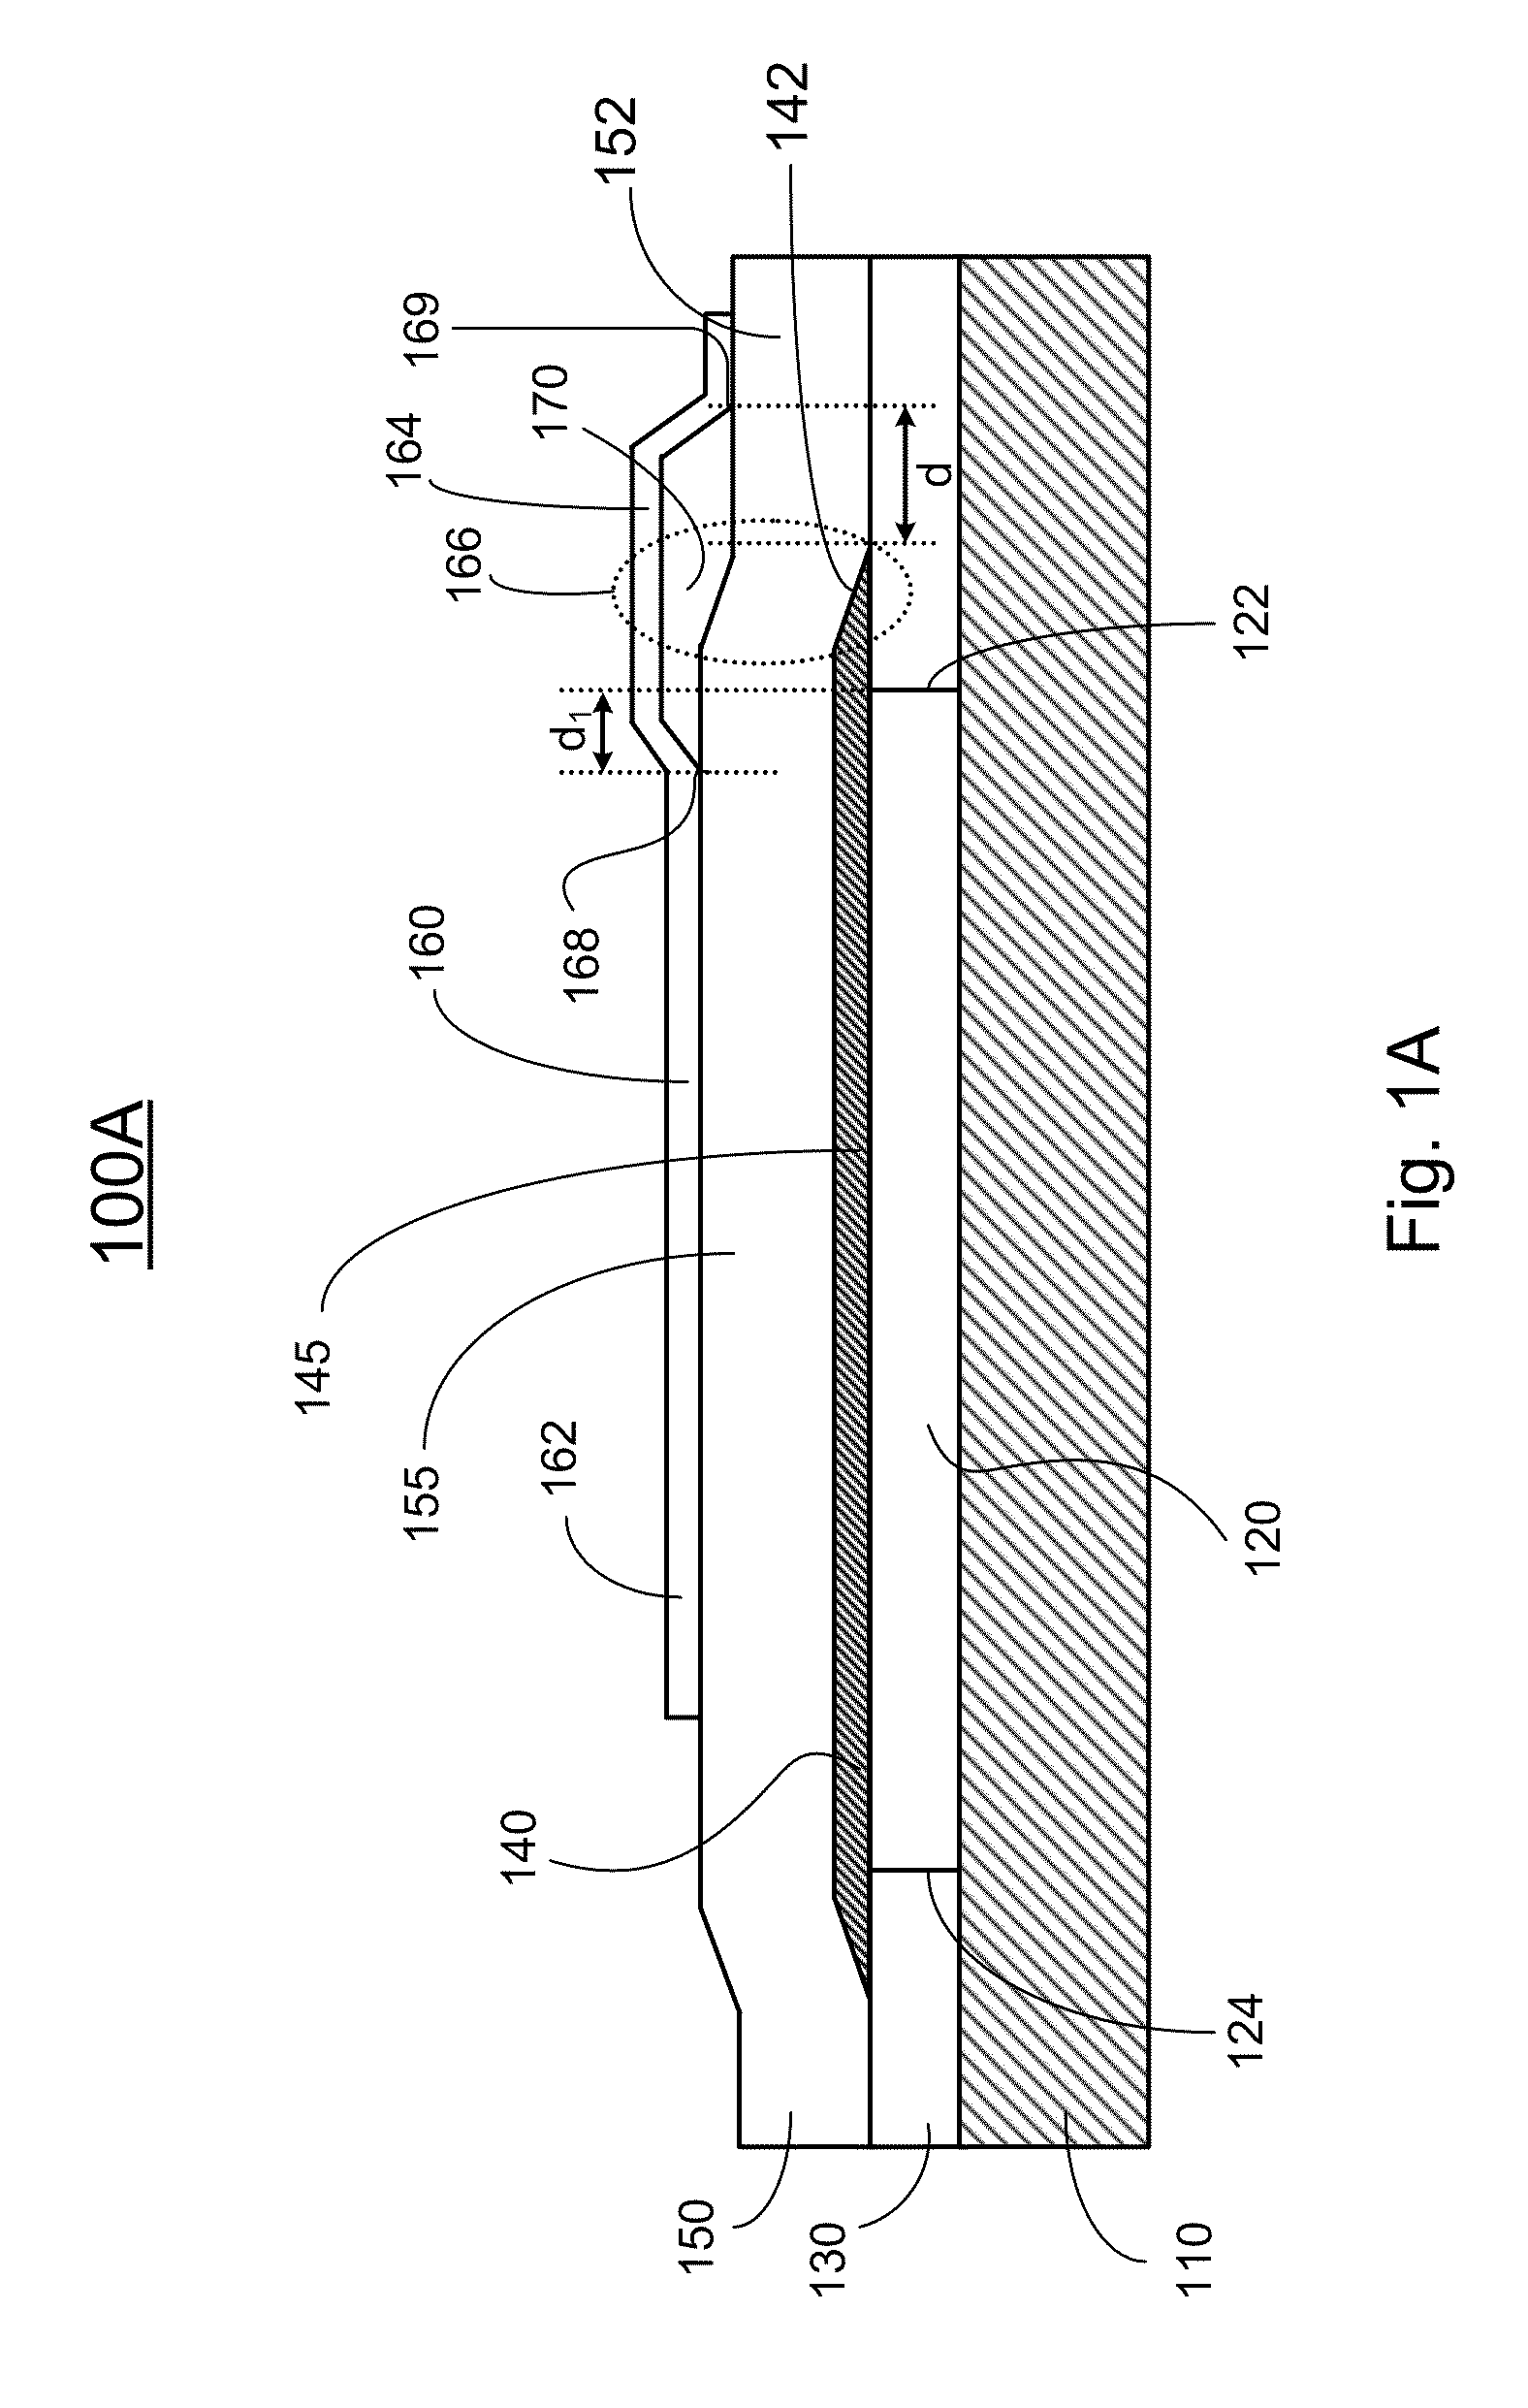 Bulk acoustic wave resonator and method of fabricating same